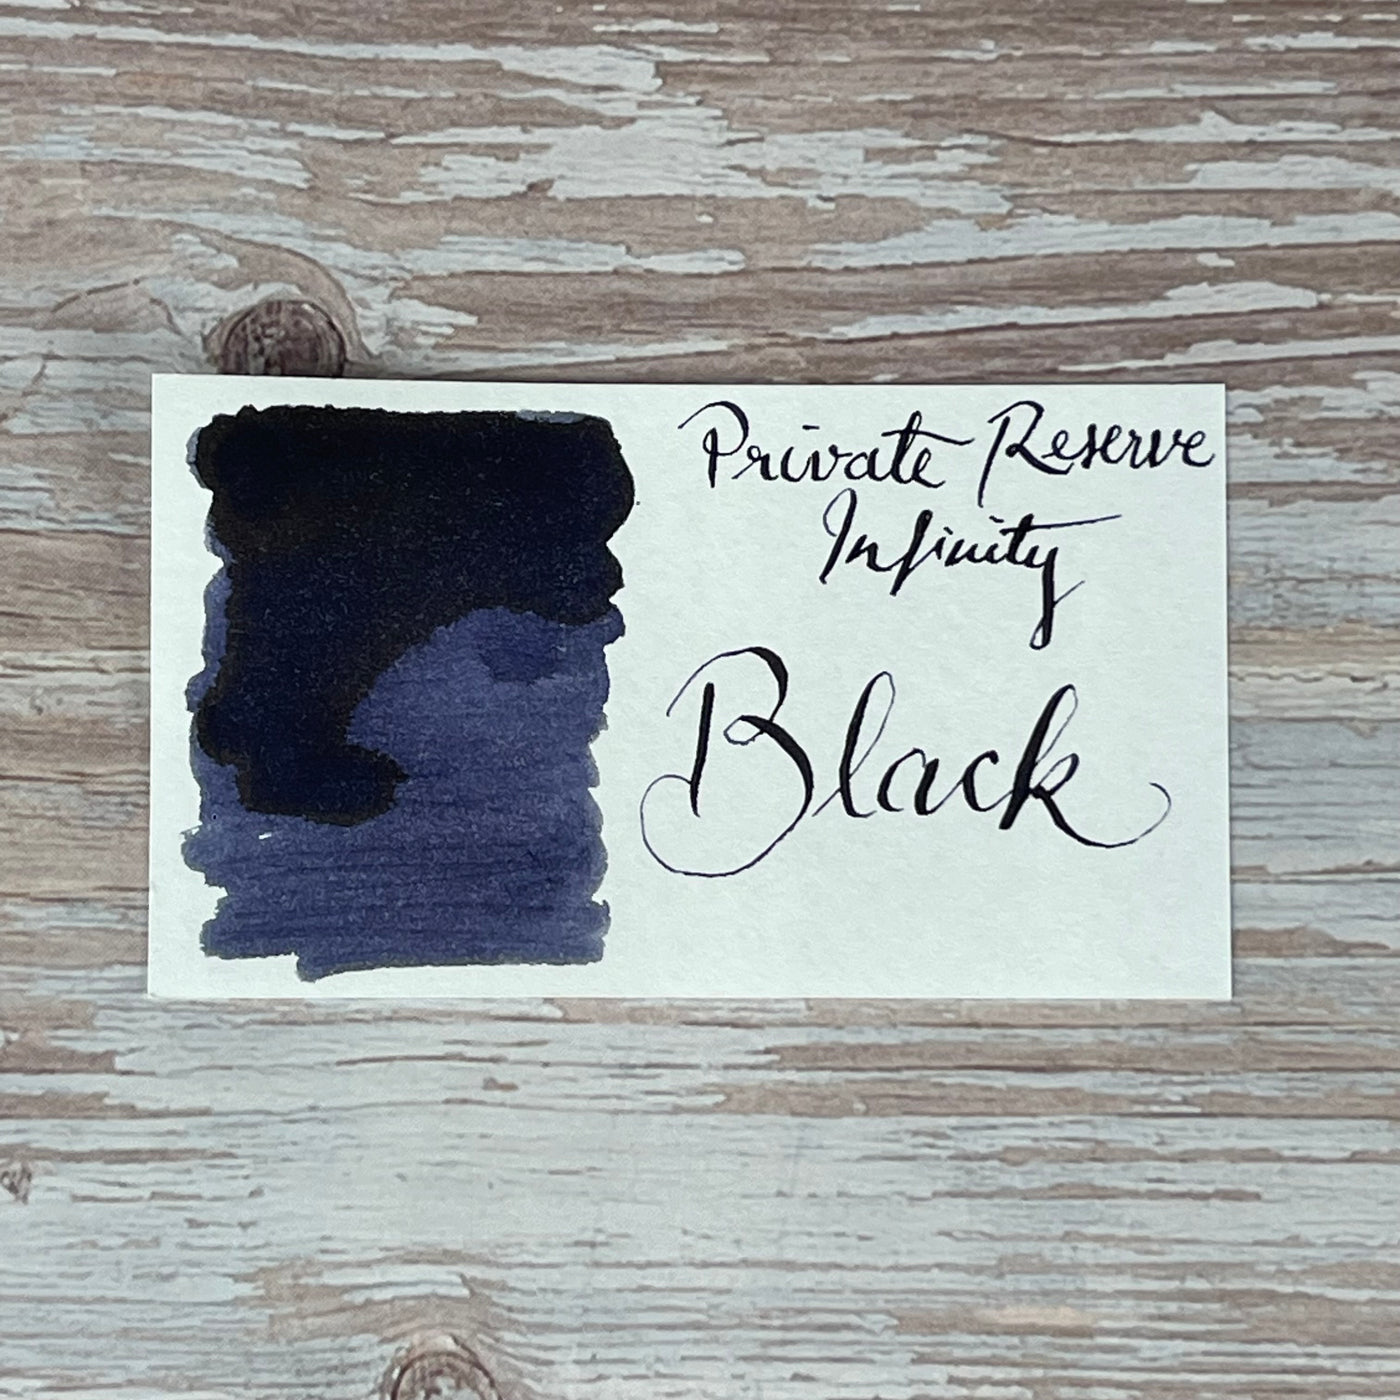 Private Reserve Infinity Black - 30ml Bottled Ink